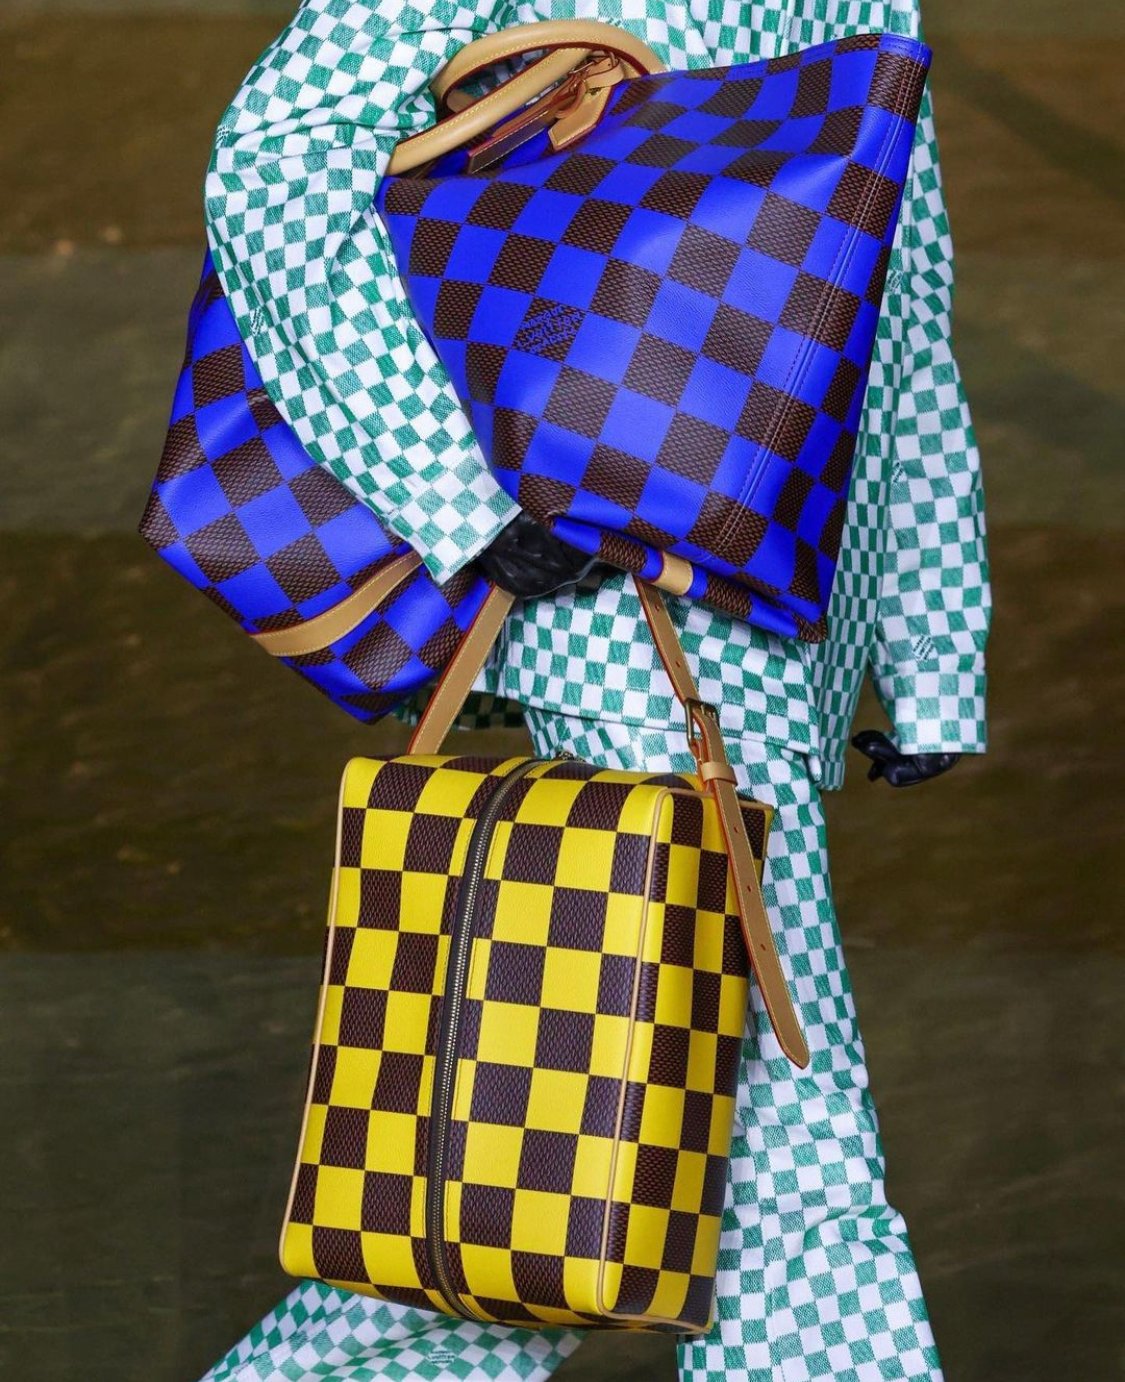 Louis Vuitton Says ByeBye to Damier Pattern